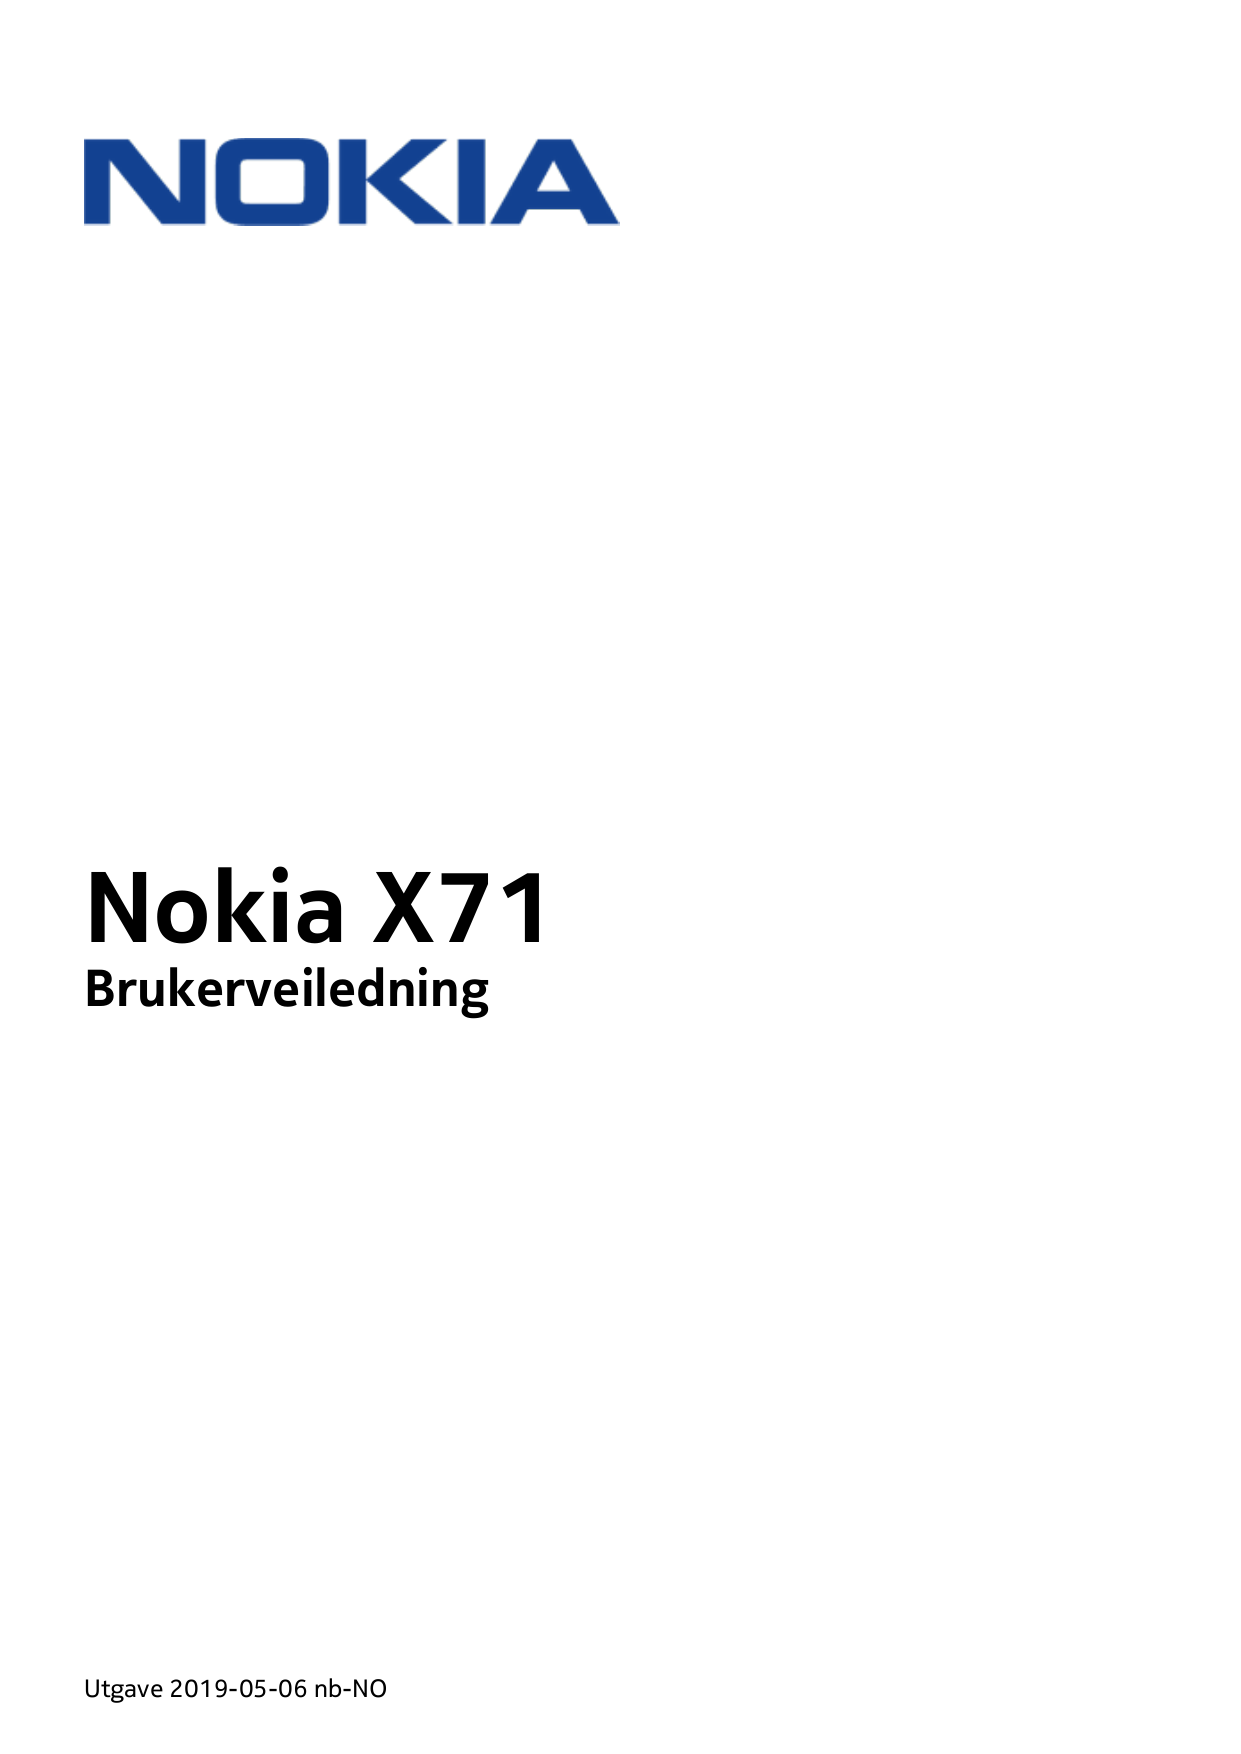 Nokia X71BrukerveiledningUtgave 2019-05-06 nb-NO